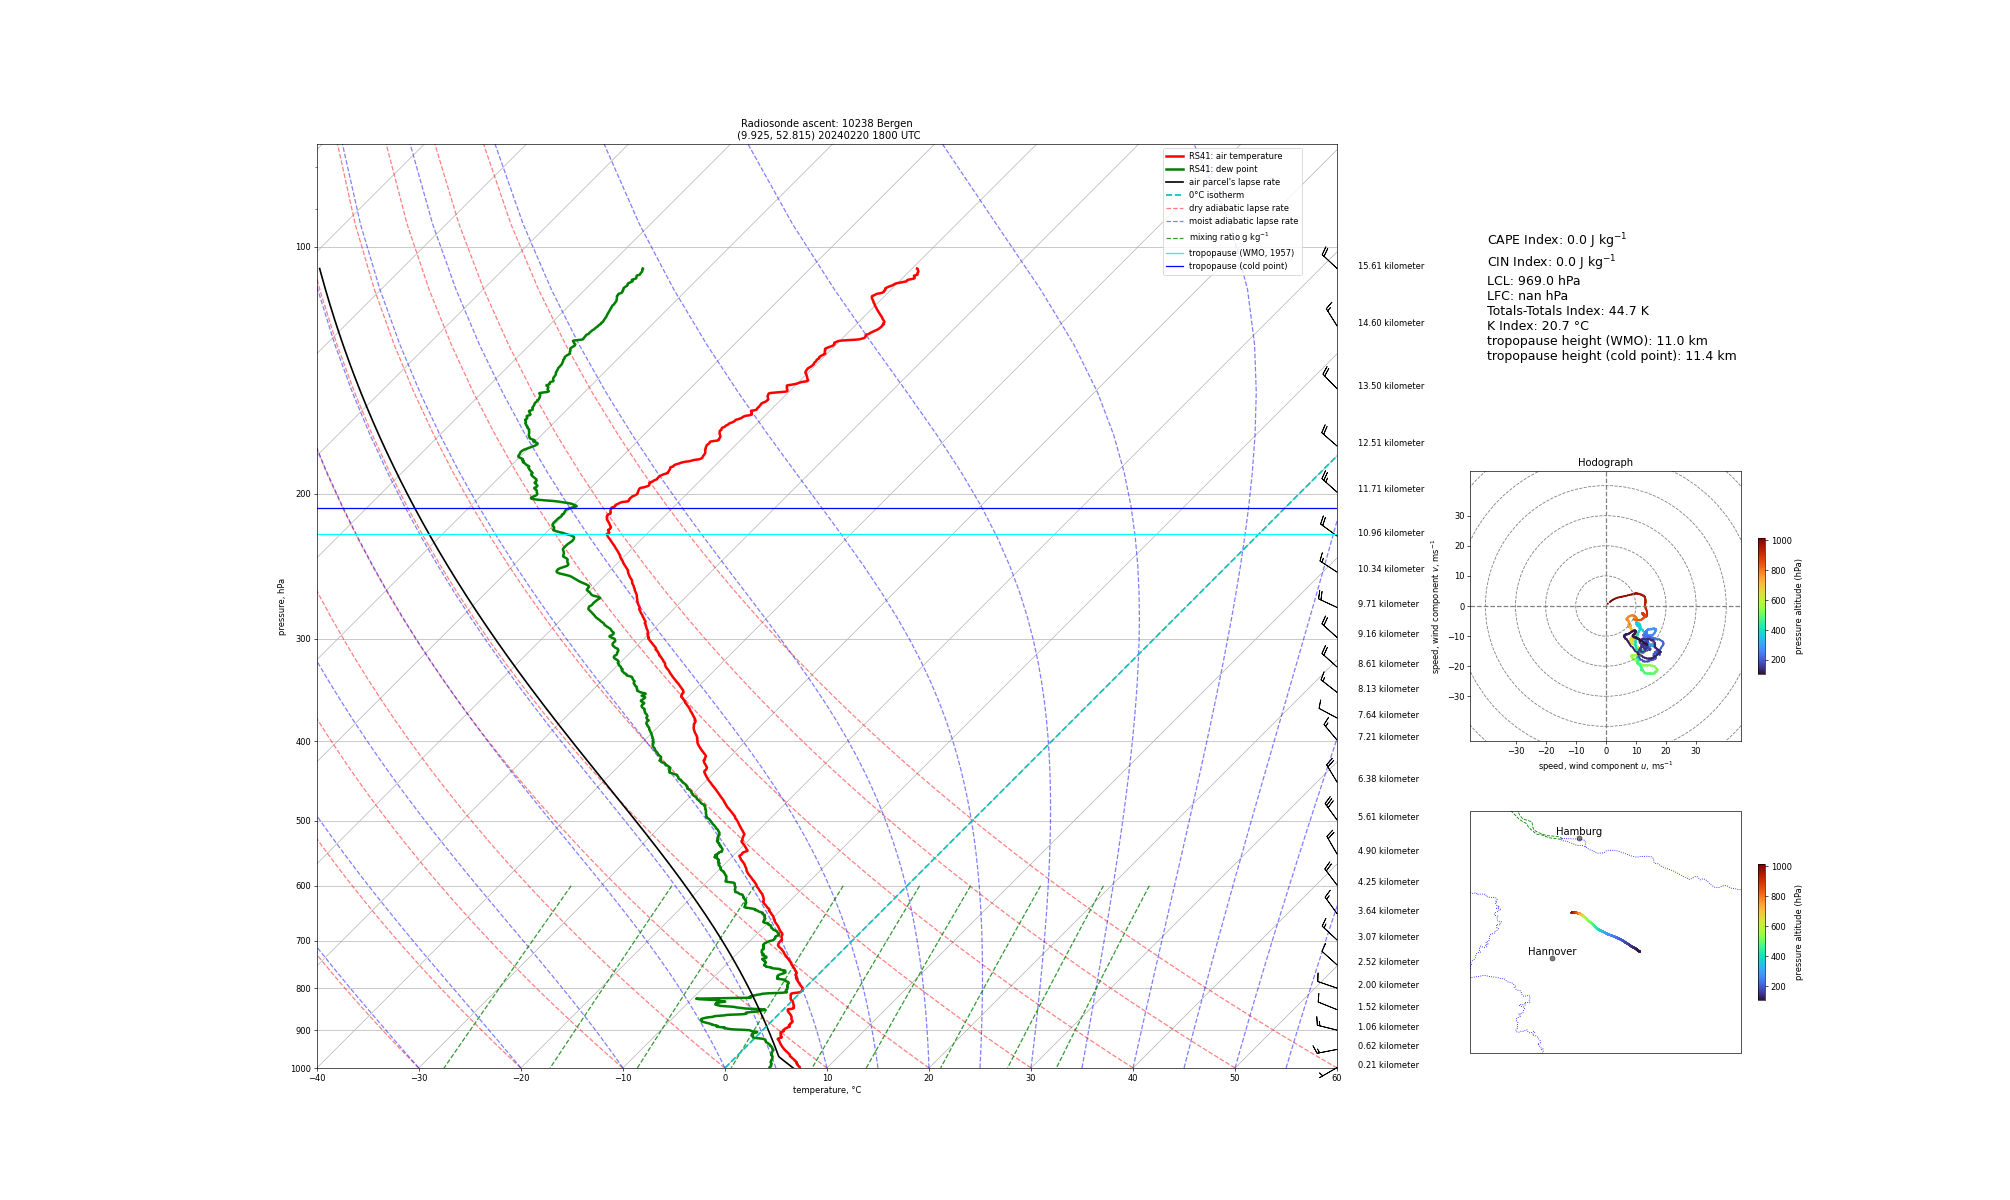 Visualisation of the radiosounding profile at Bergen at 1800 UTC